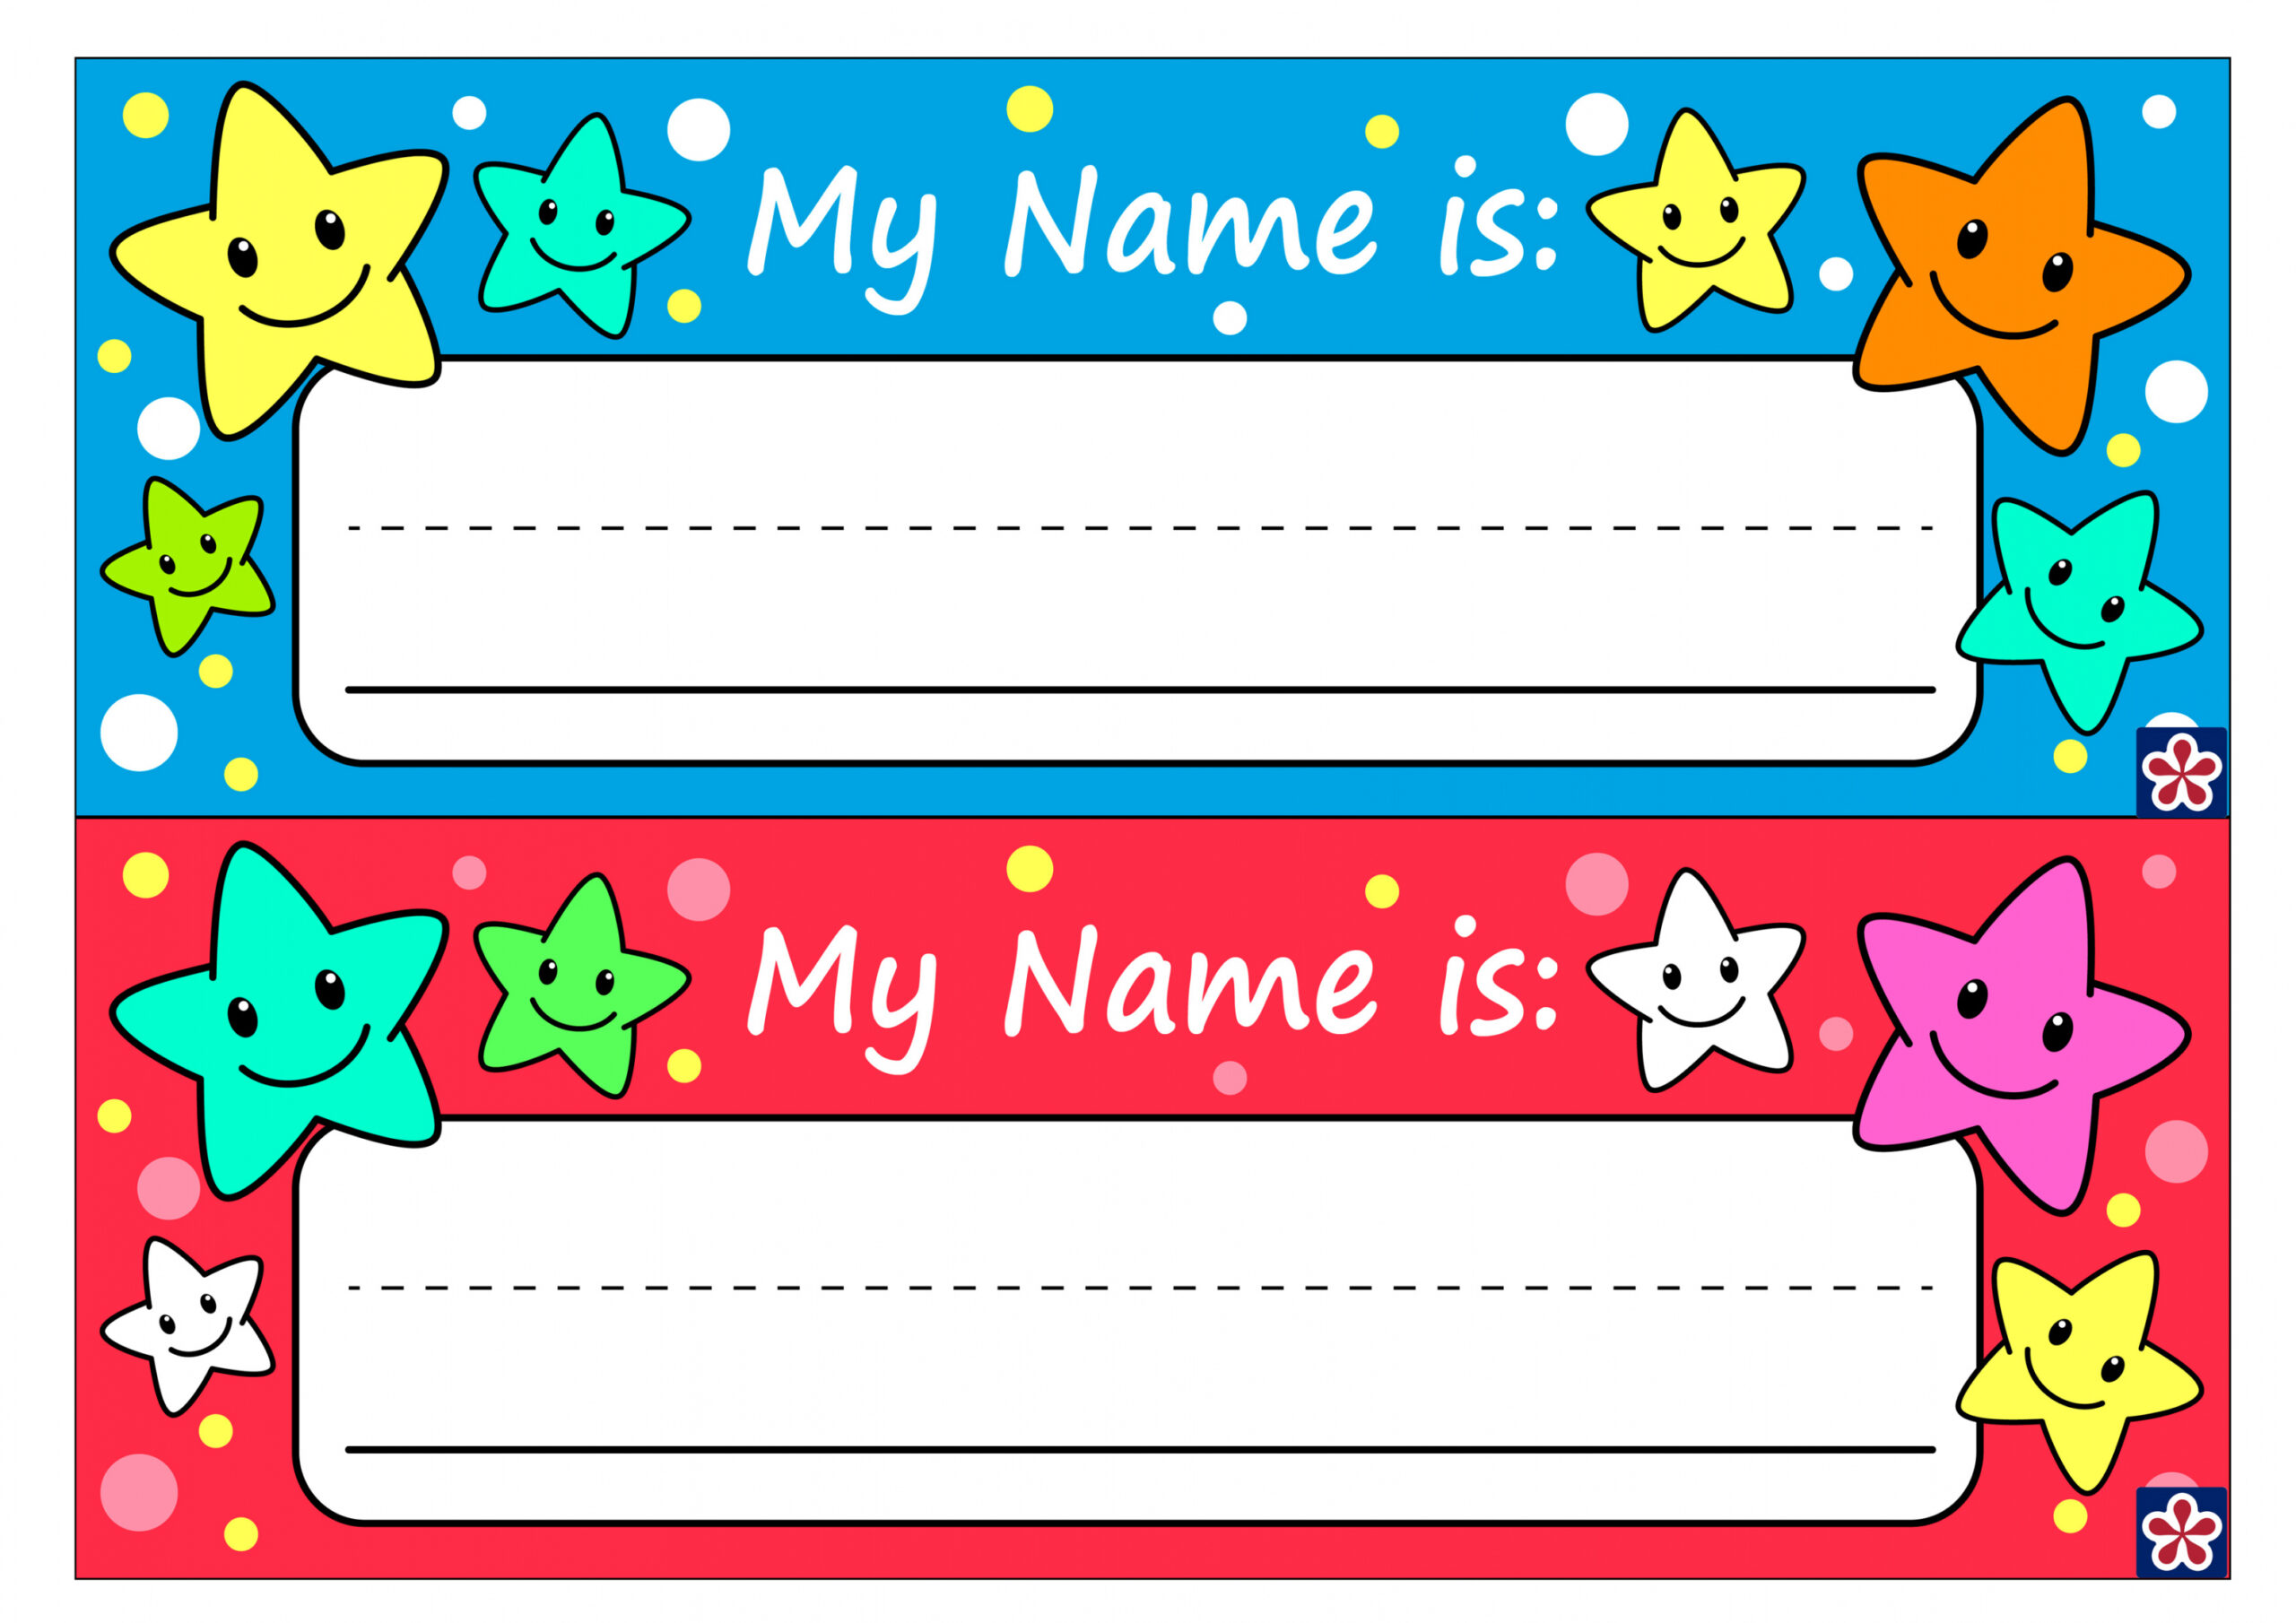 Free Printable Name Tags for Preschoolers. TeachersMag